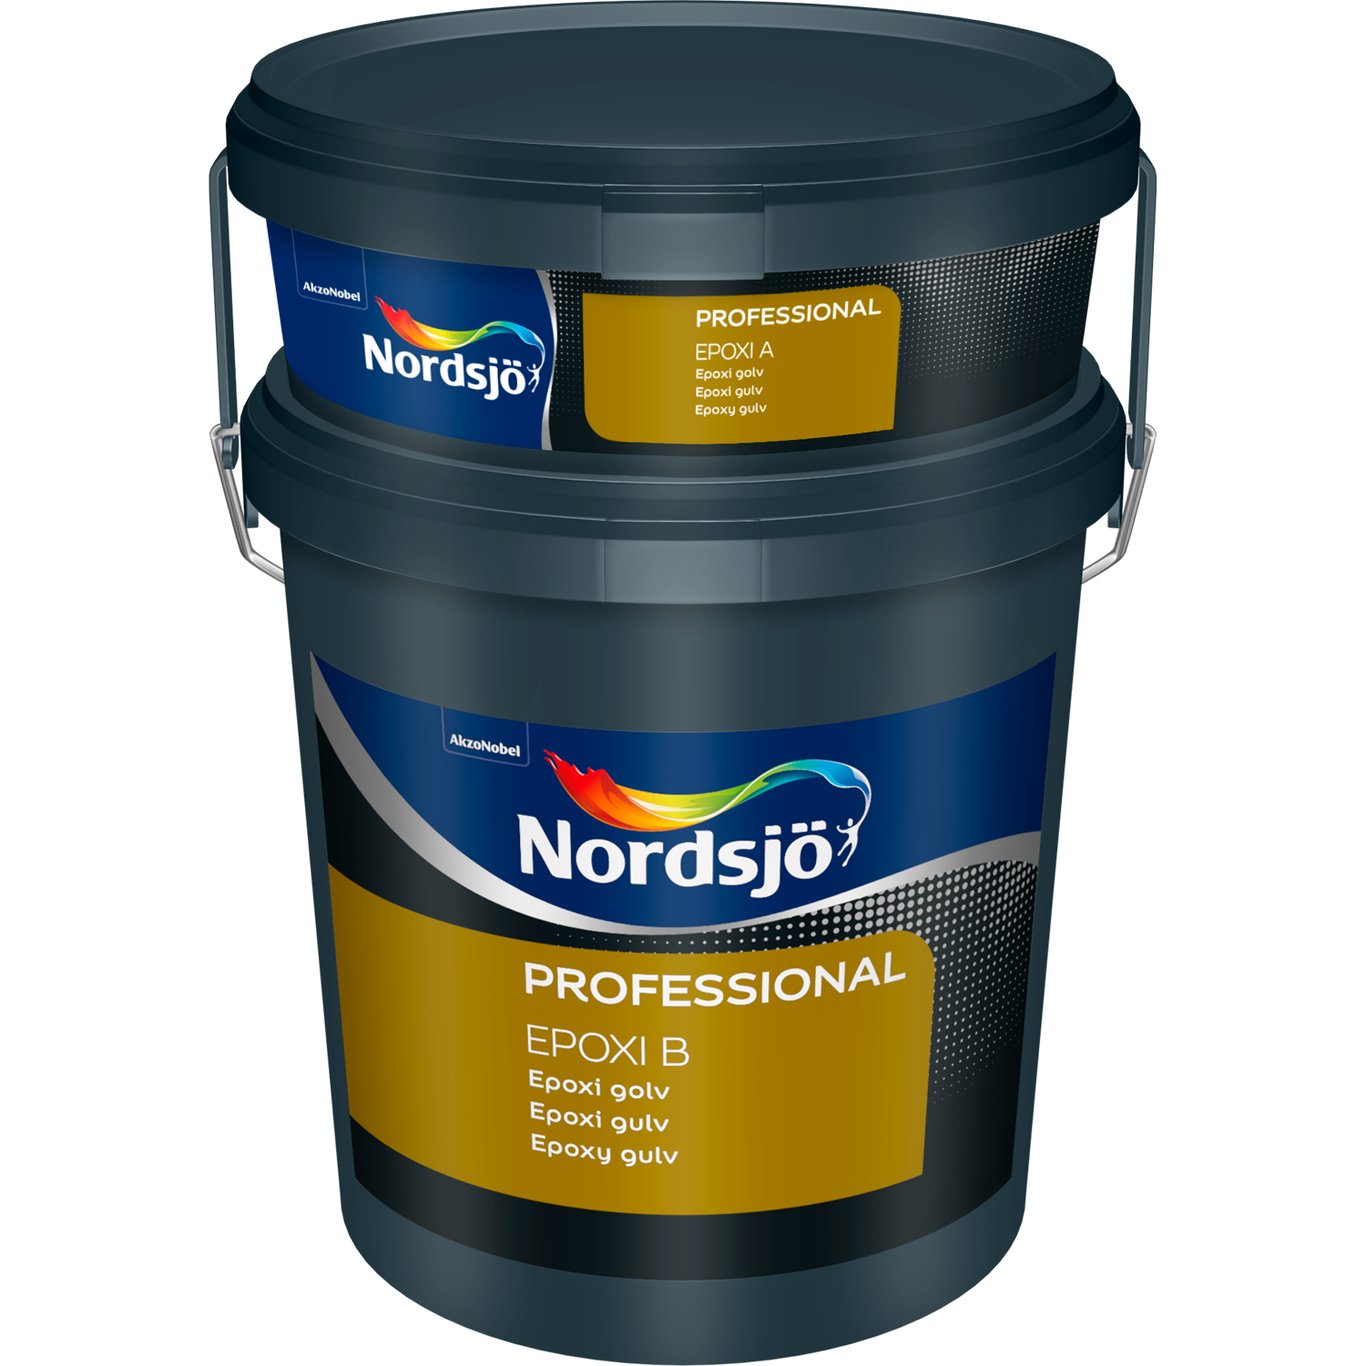 NORDSJØ PROFESSIONAL EPOXY GULV HVIT 0,8L INKL. HERDER